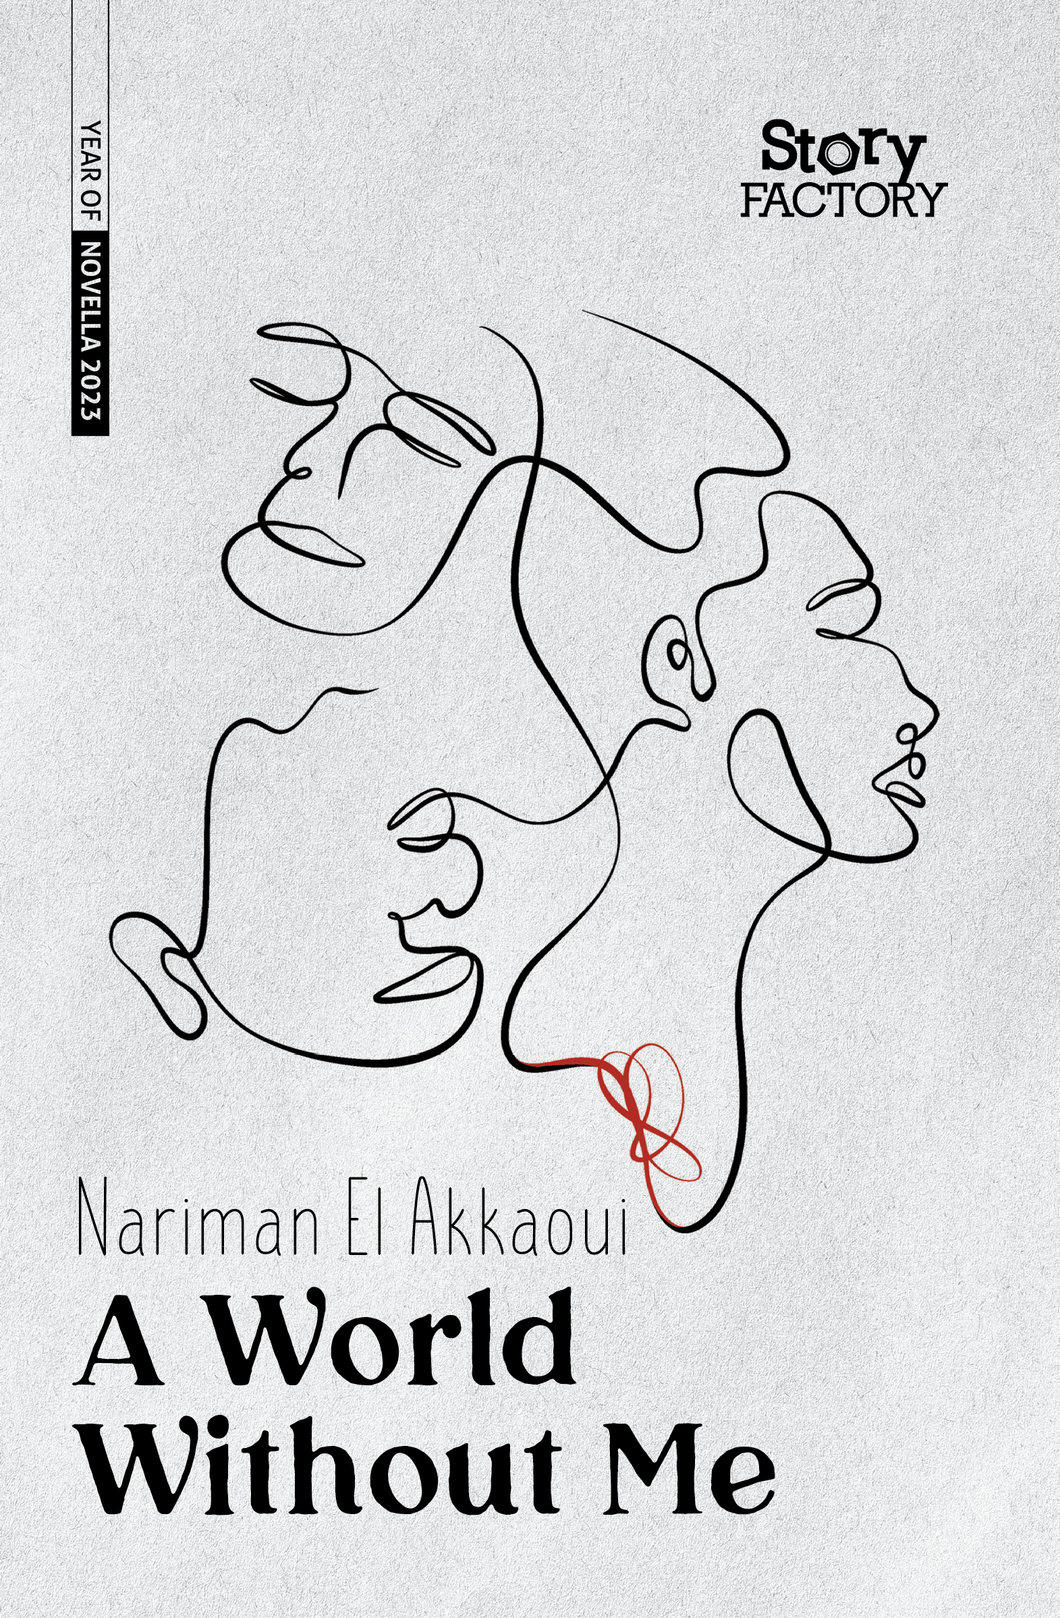 A World Without Me by Nariman El Akkaoui